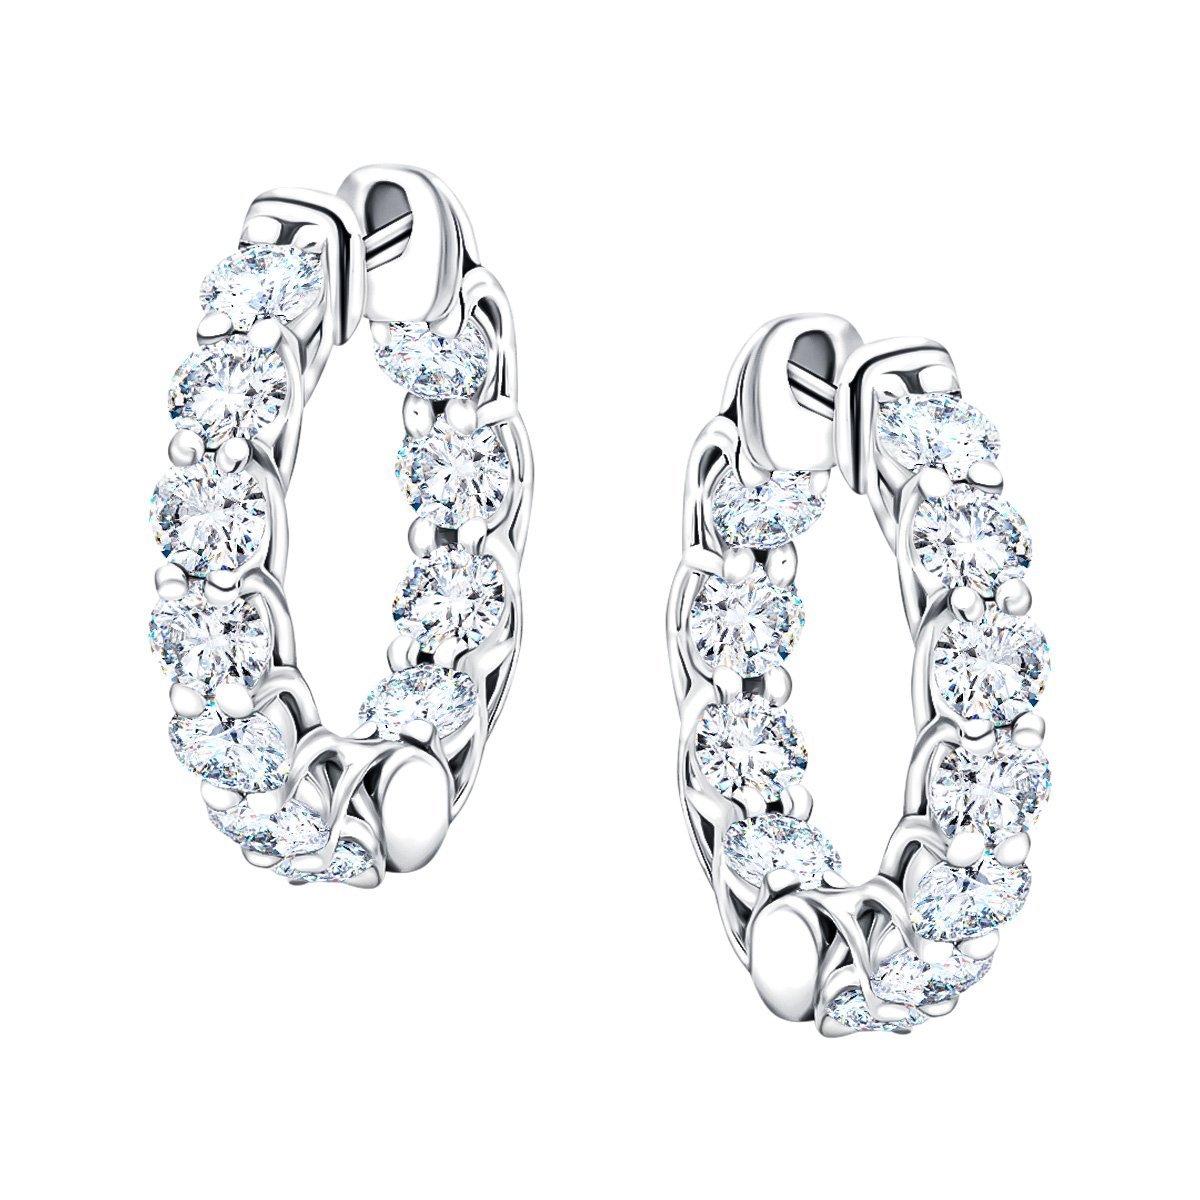 Classic Diamond Hoop Earrings 2.20ct G/SI Quality in 18k White Gold - All Diamond